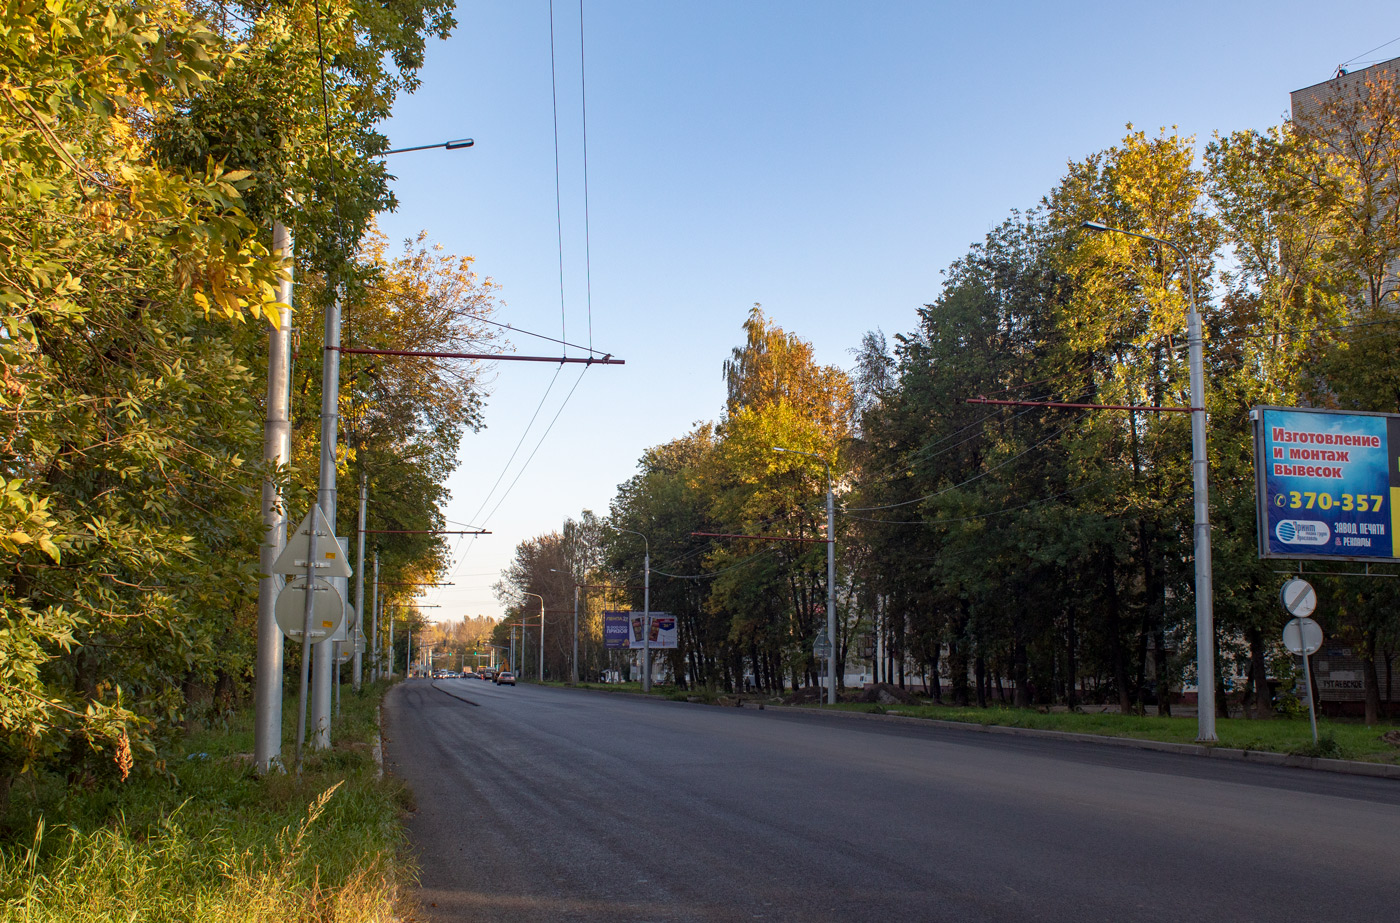 Jaroslavlis — Reconstruction of tutaevsky road 2019-2020; Jaroslavlis — Trolleybus lines